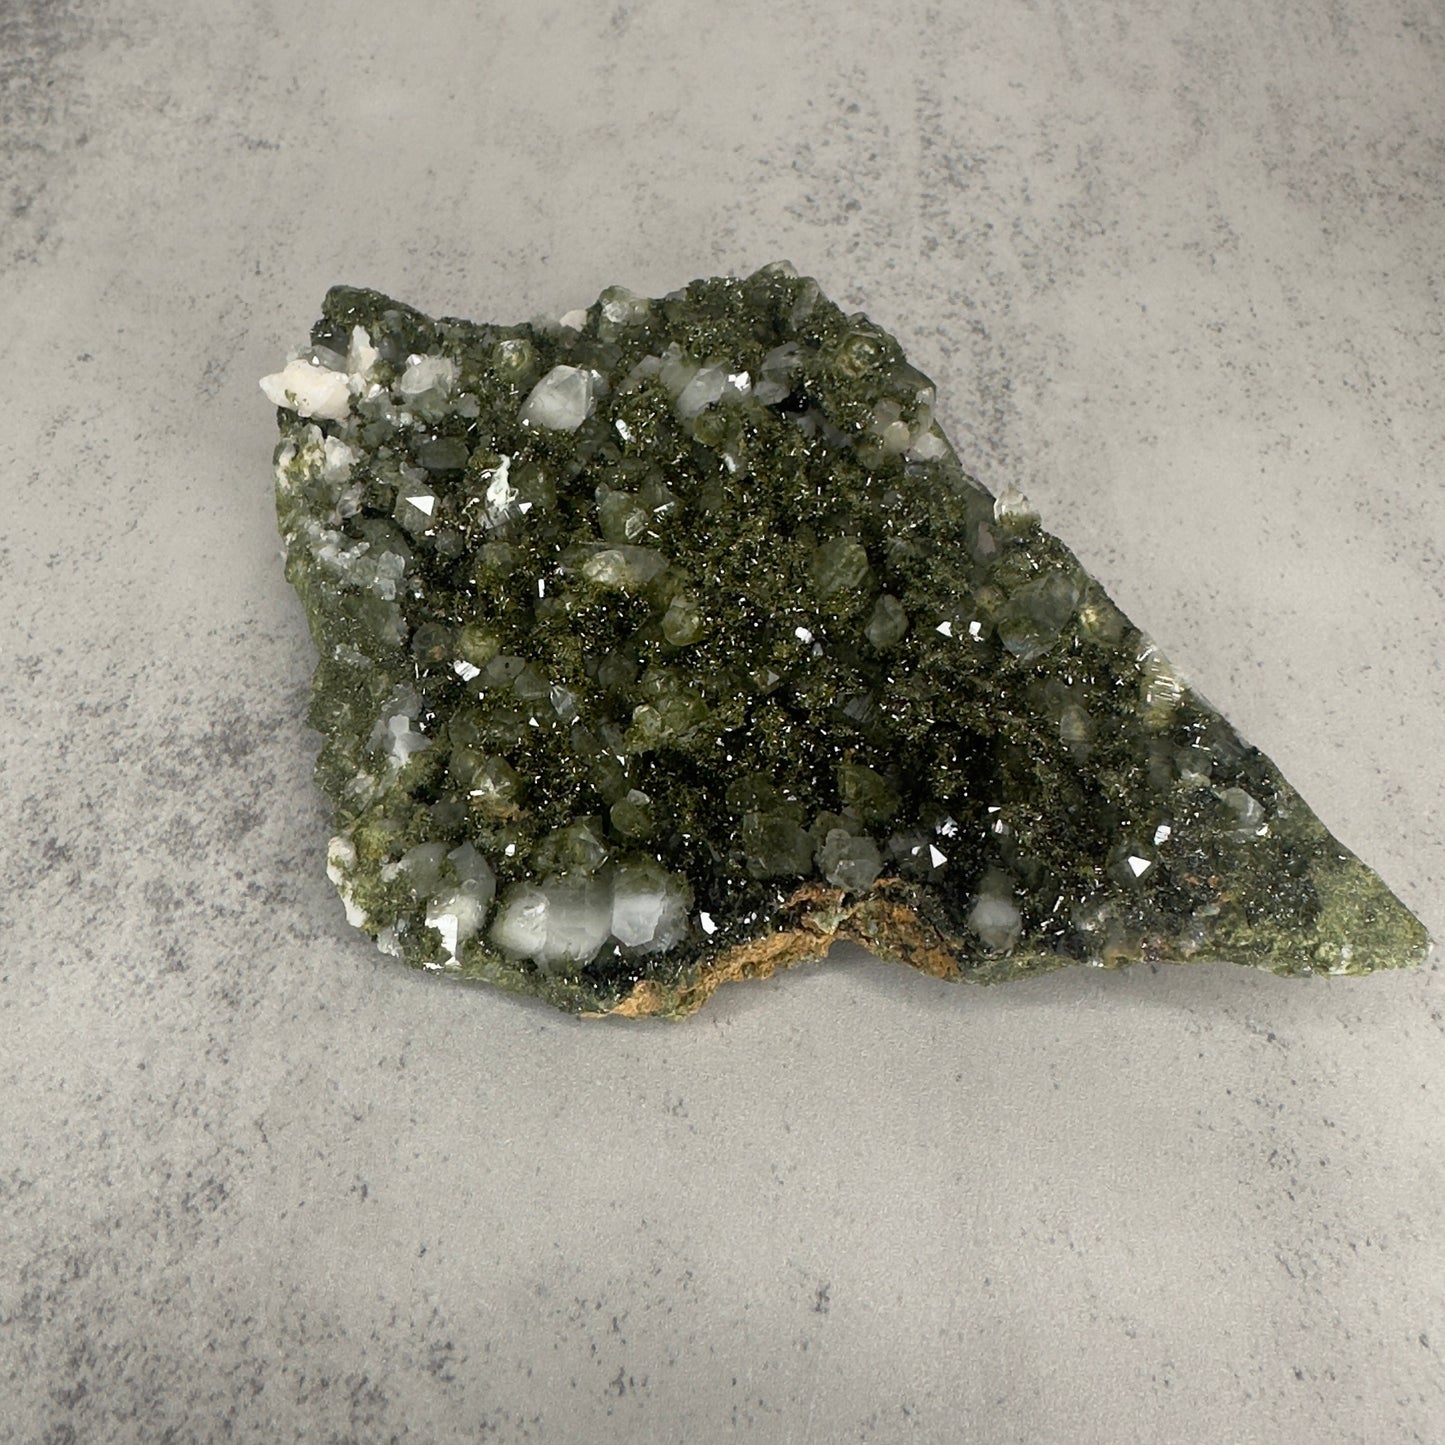 Spectacular Epidote on Quartz Genuine Crystal Cluster Specimen From Turkey | Tucson Gem Show Exclusive